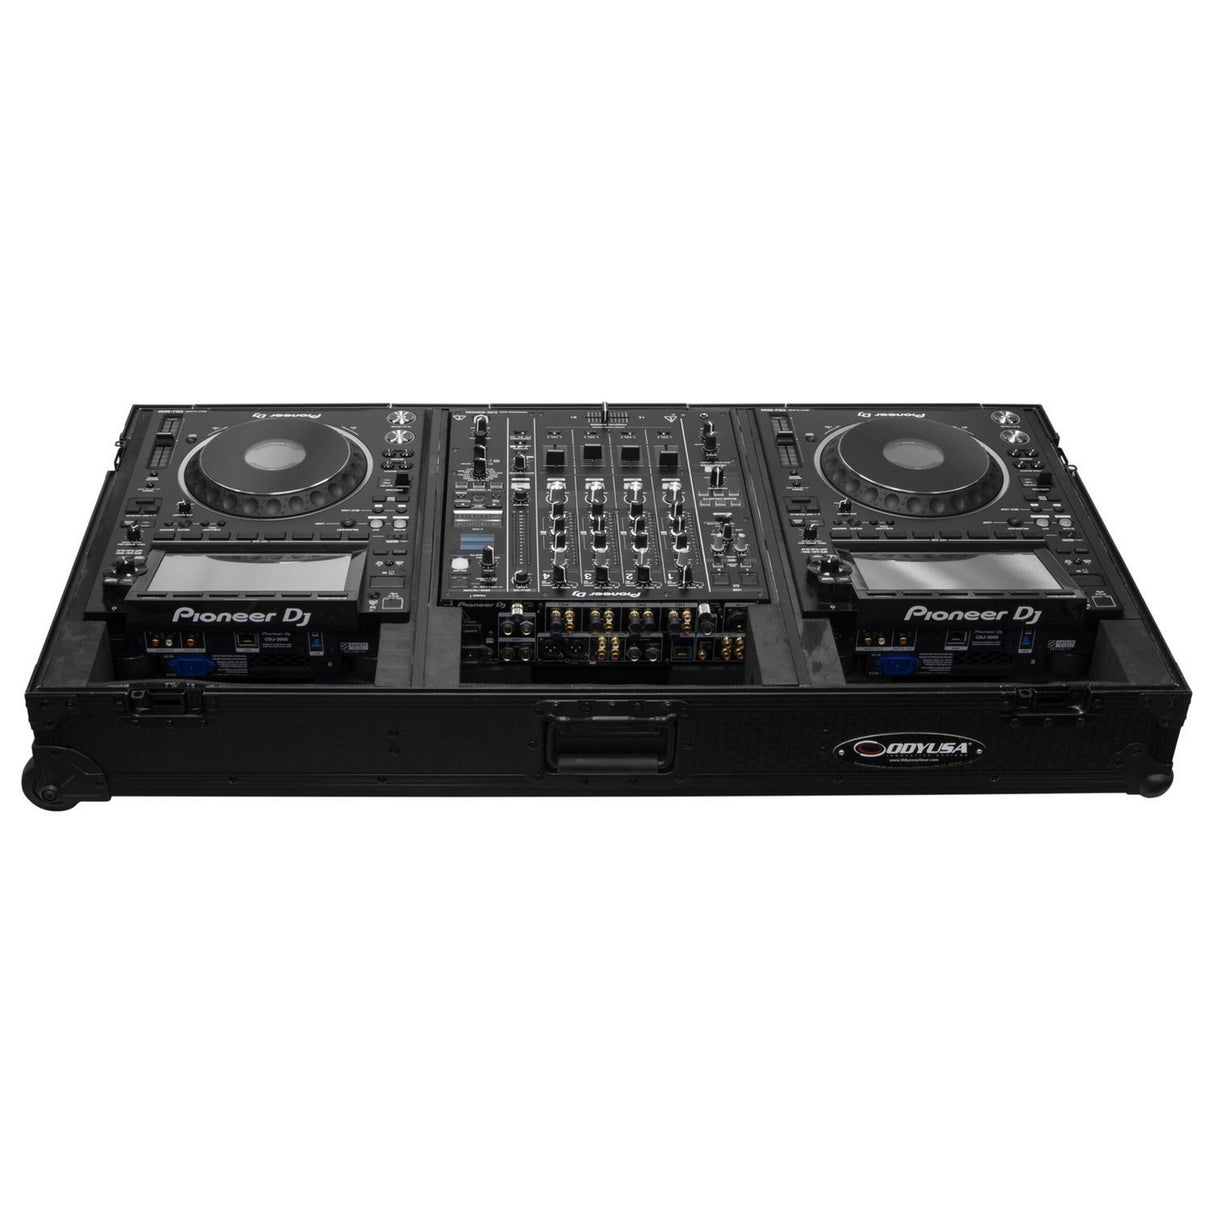 Odyssey 810158 Industrial Board Case for 12-Inch DJ Mixers/Two Pioneer CDJ-3000